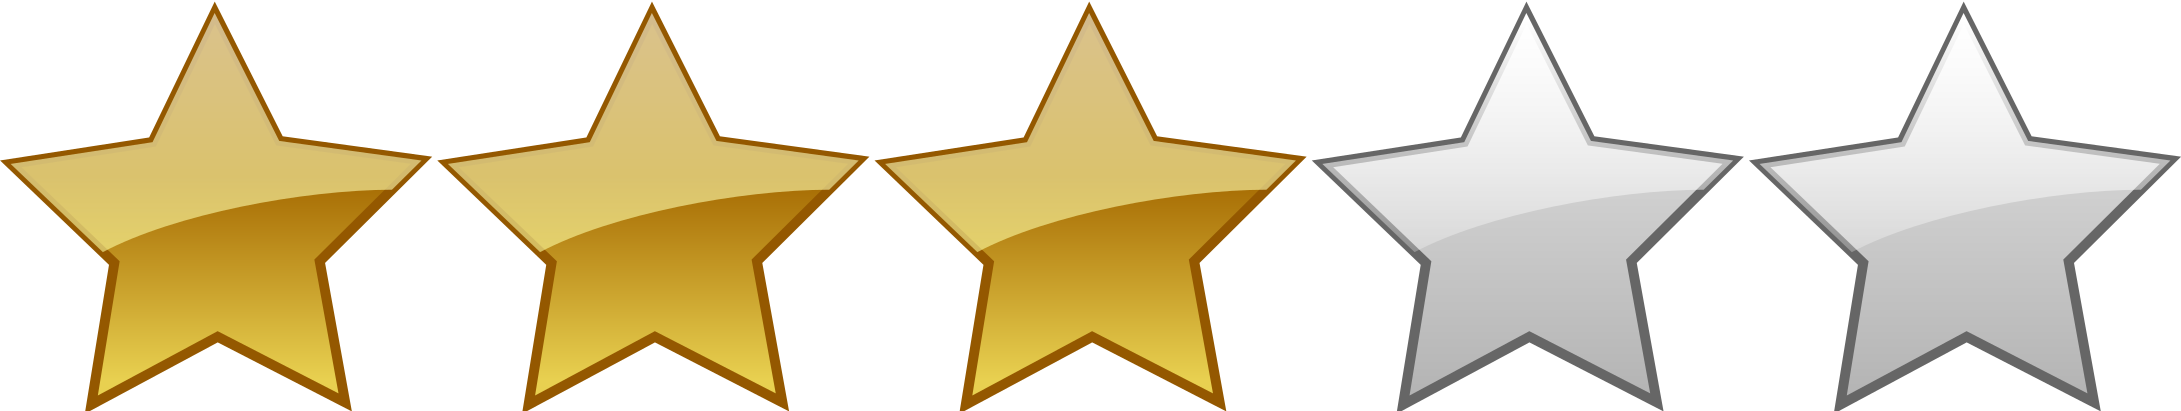 Rating - 3 Stars